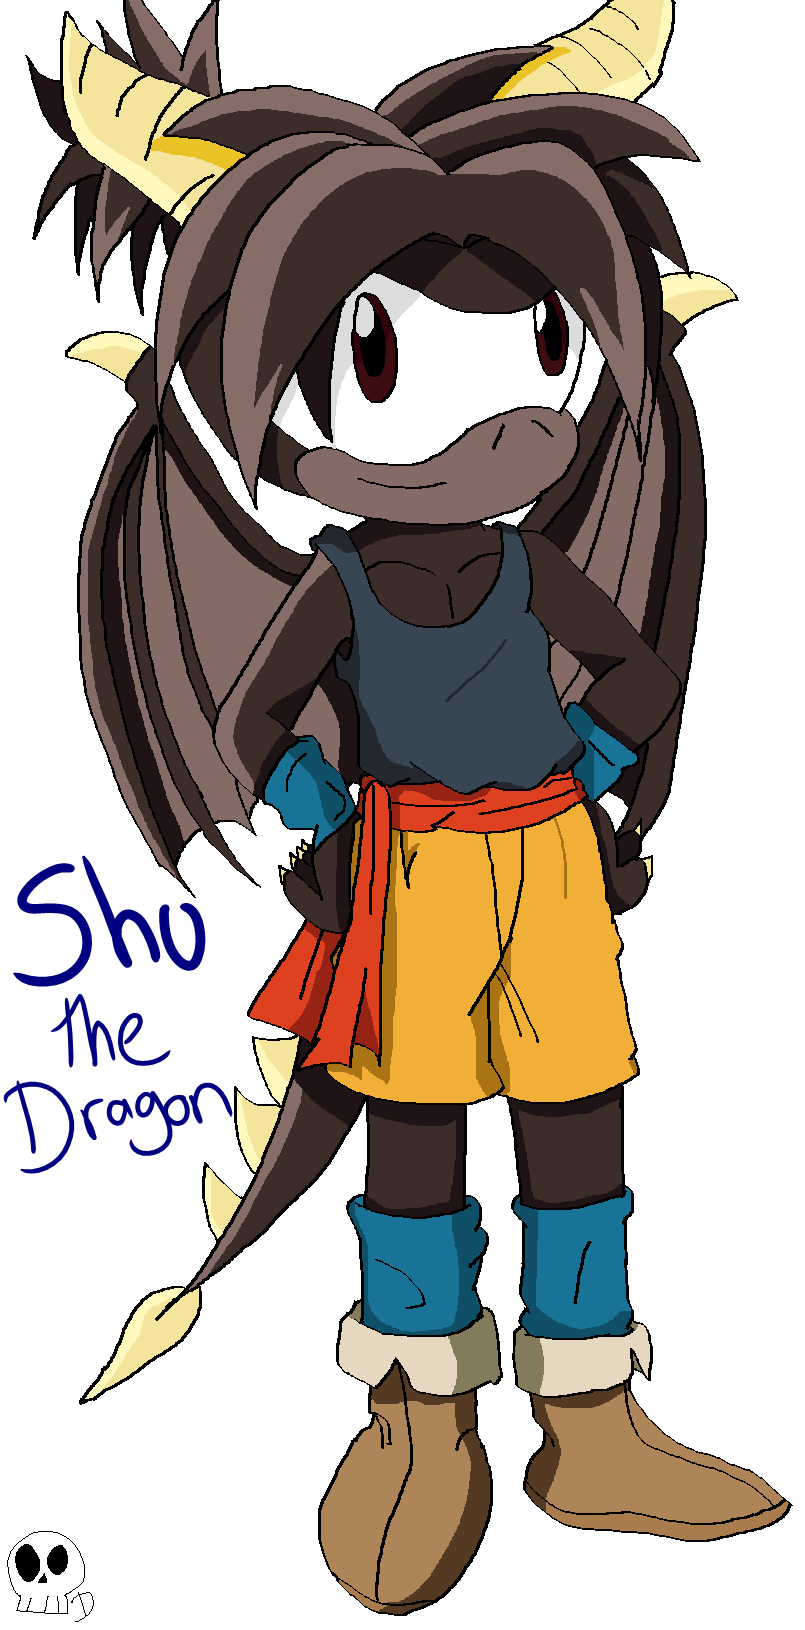 Shu the Dragon by Goka